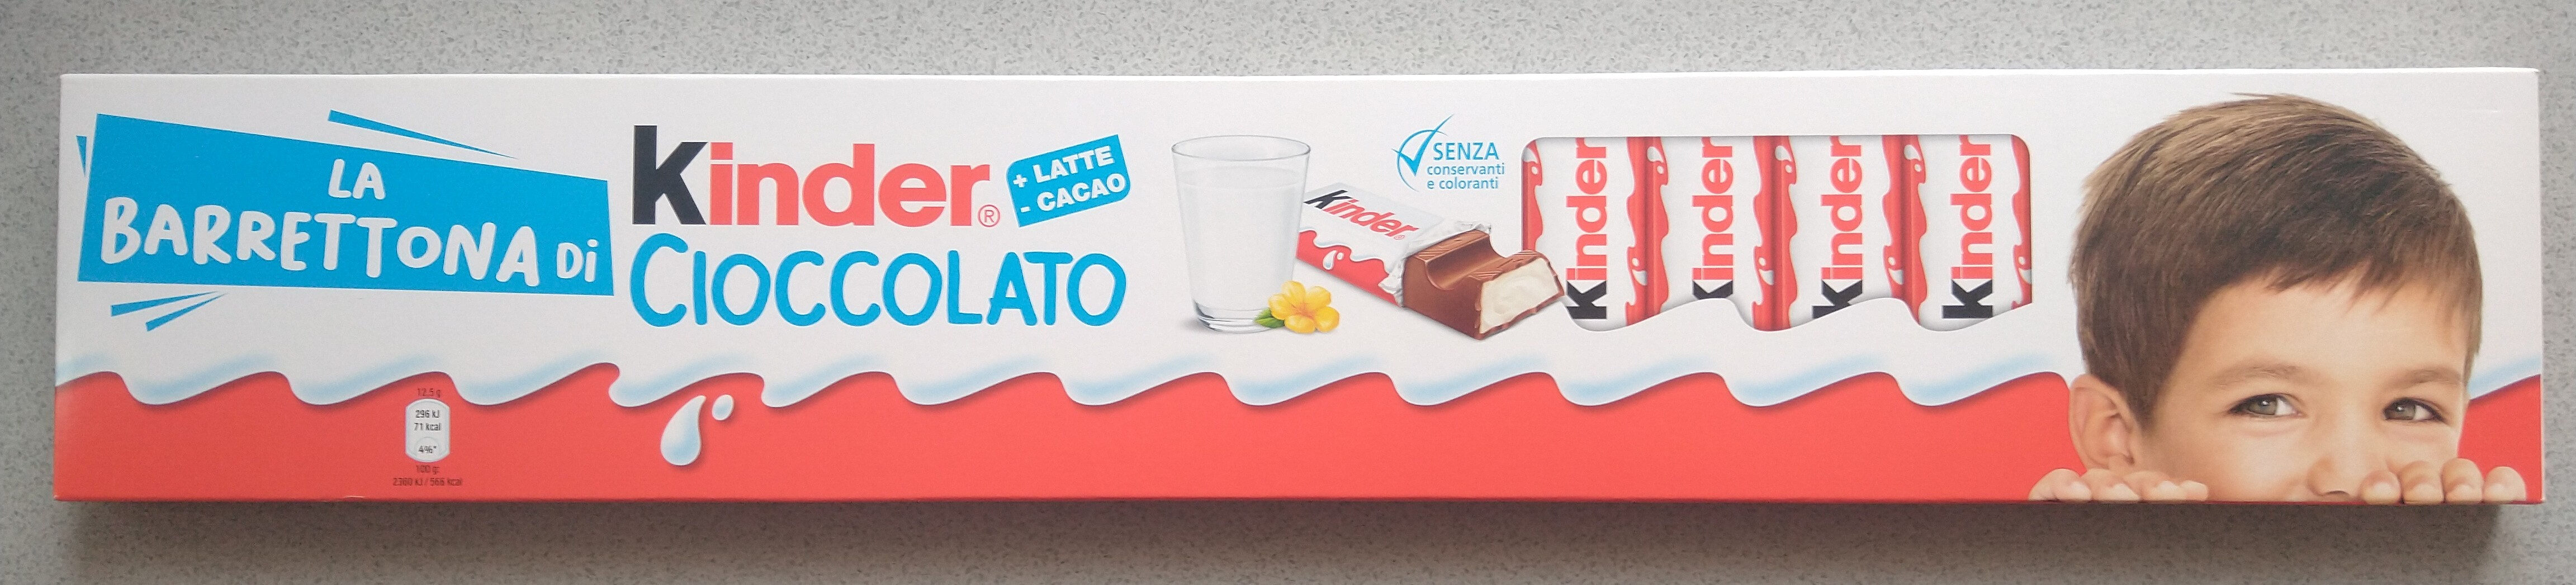 Kinder Cioccolato La Barrettona - Produkt - it